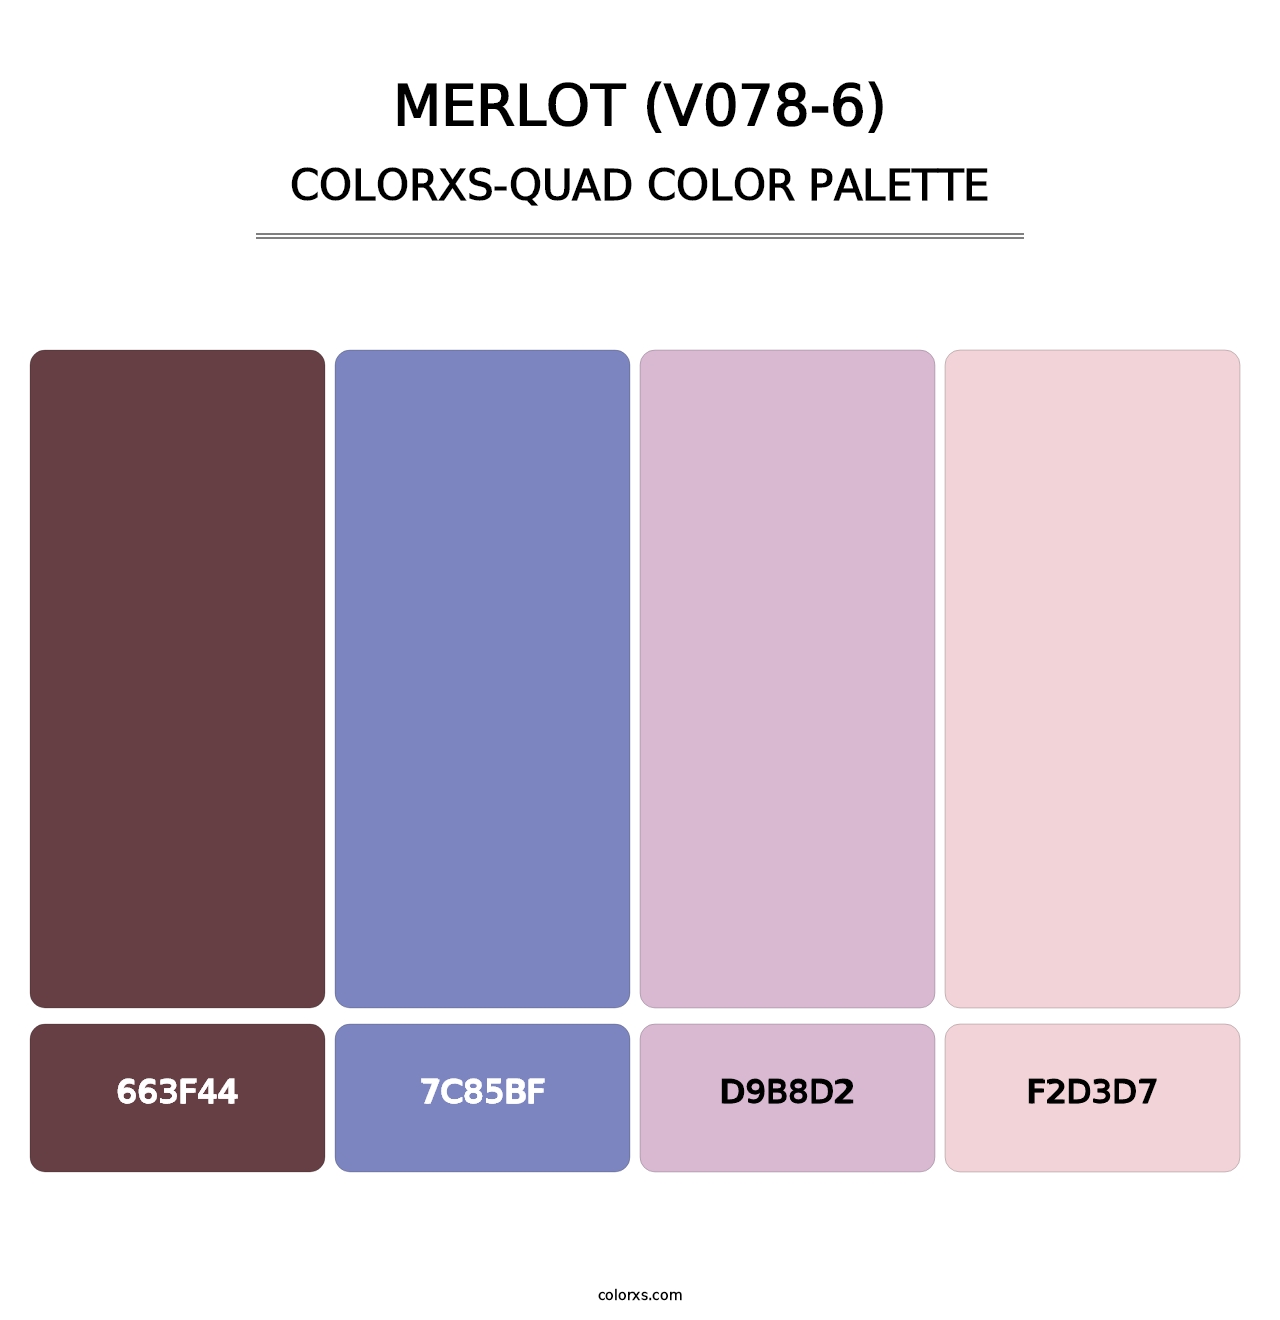 Merlot (V078-6) - Colorxs Quad Palette